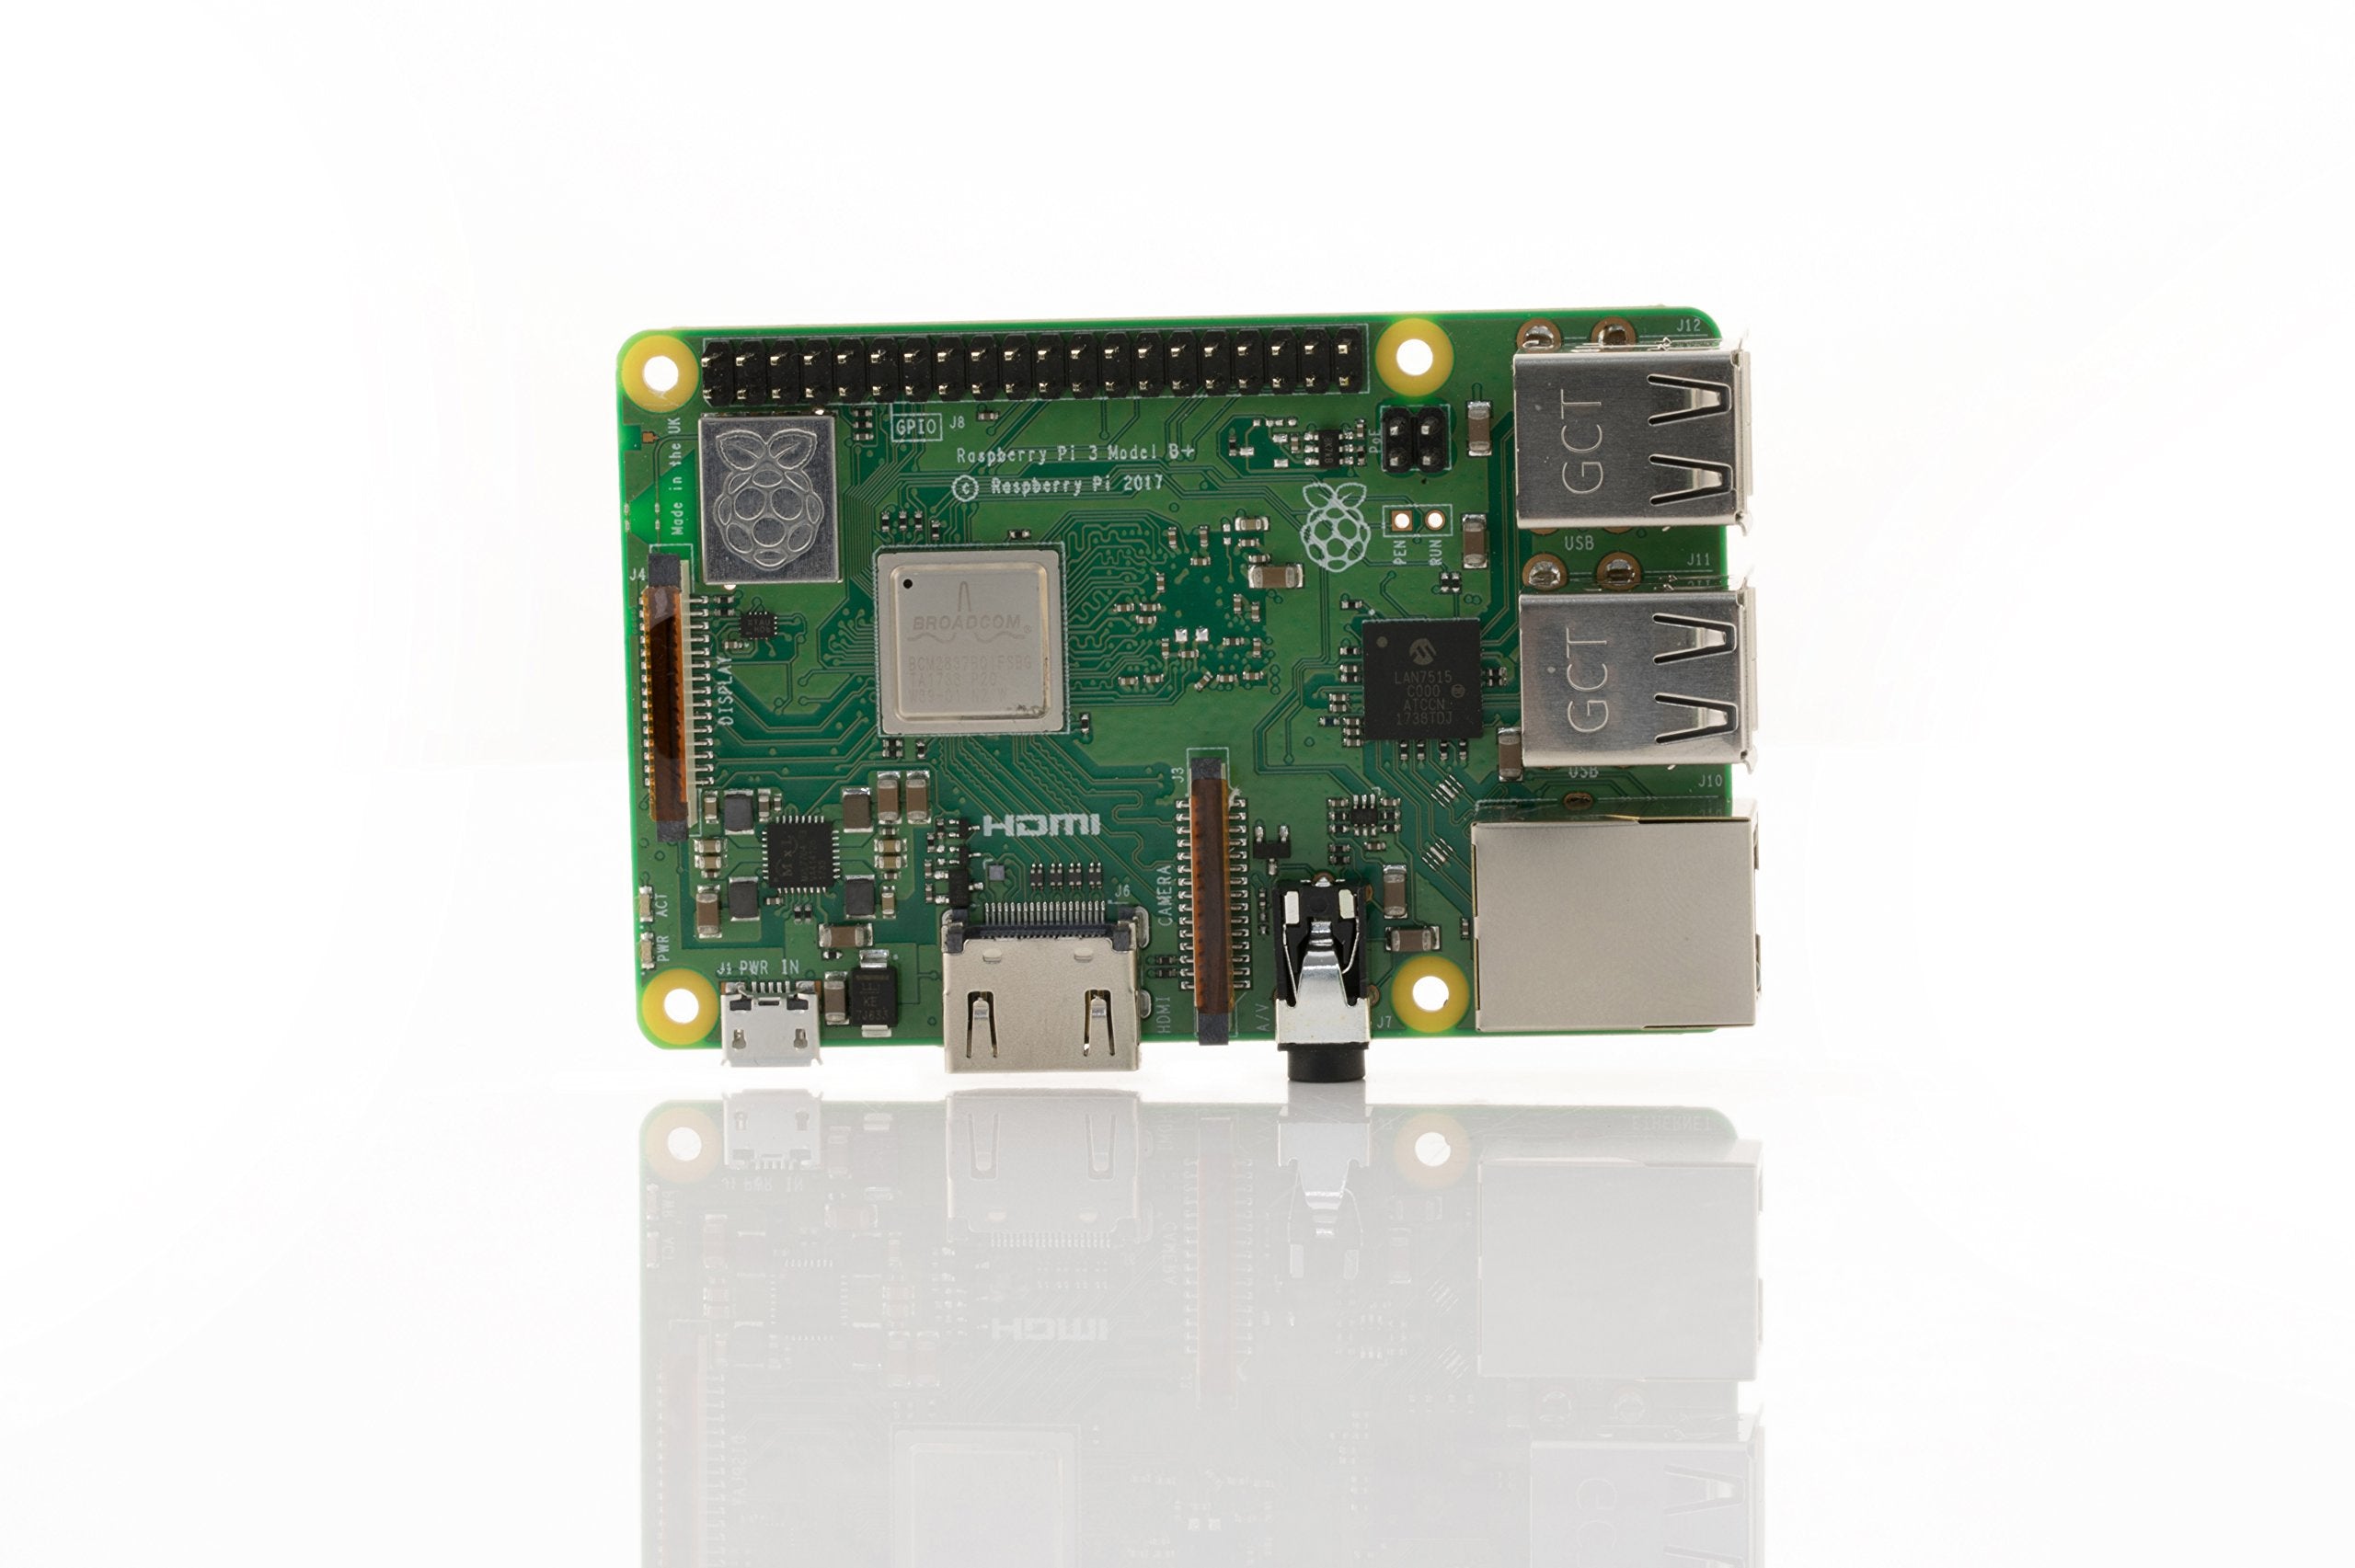 Raspberry Pi 3 Model B+ Motherboard, 1GB, 1.4GHz ARM CPU